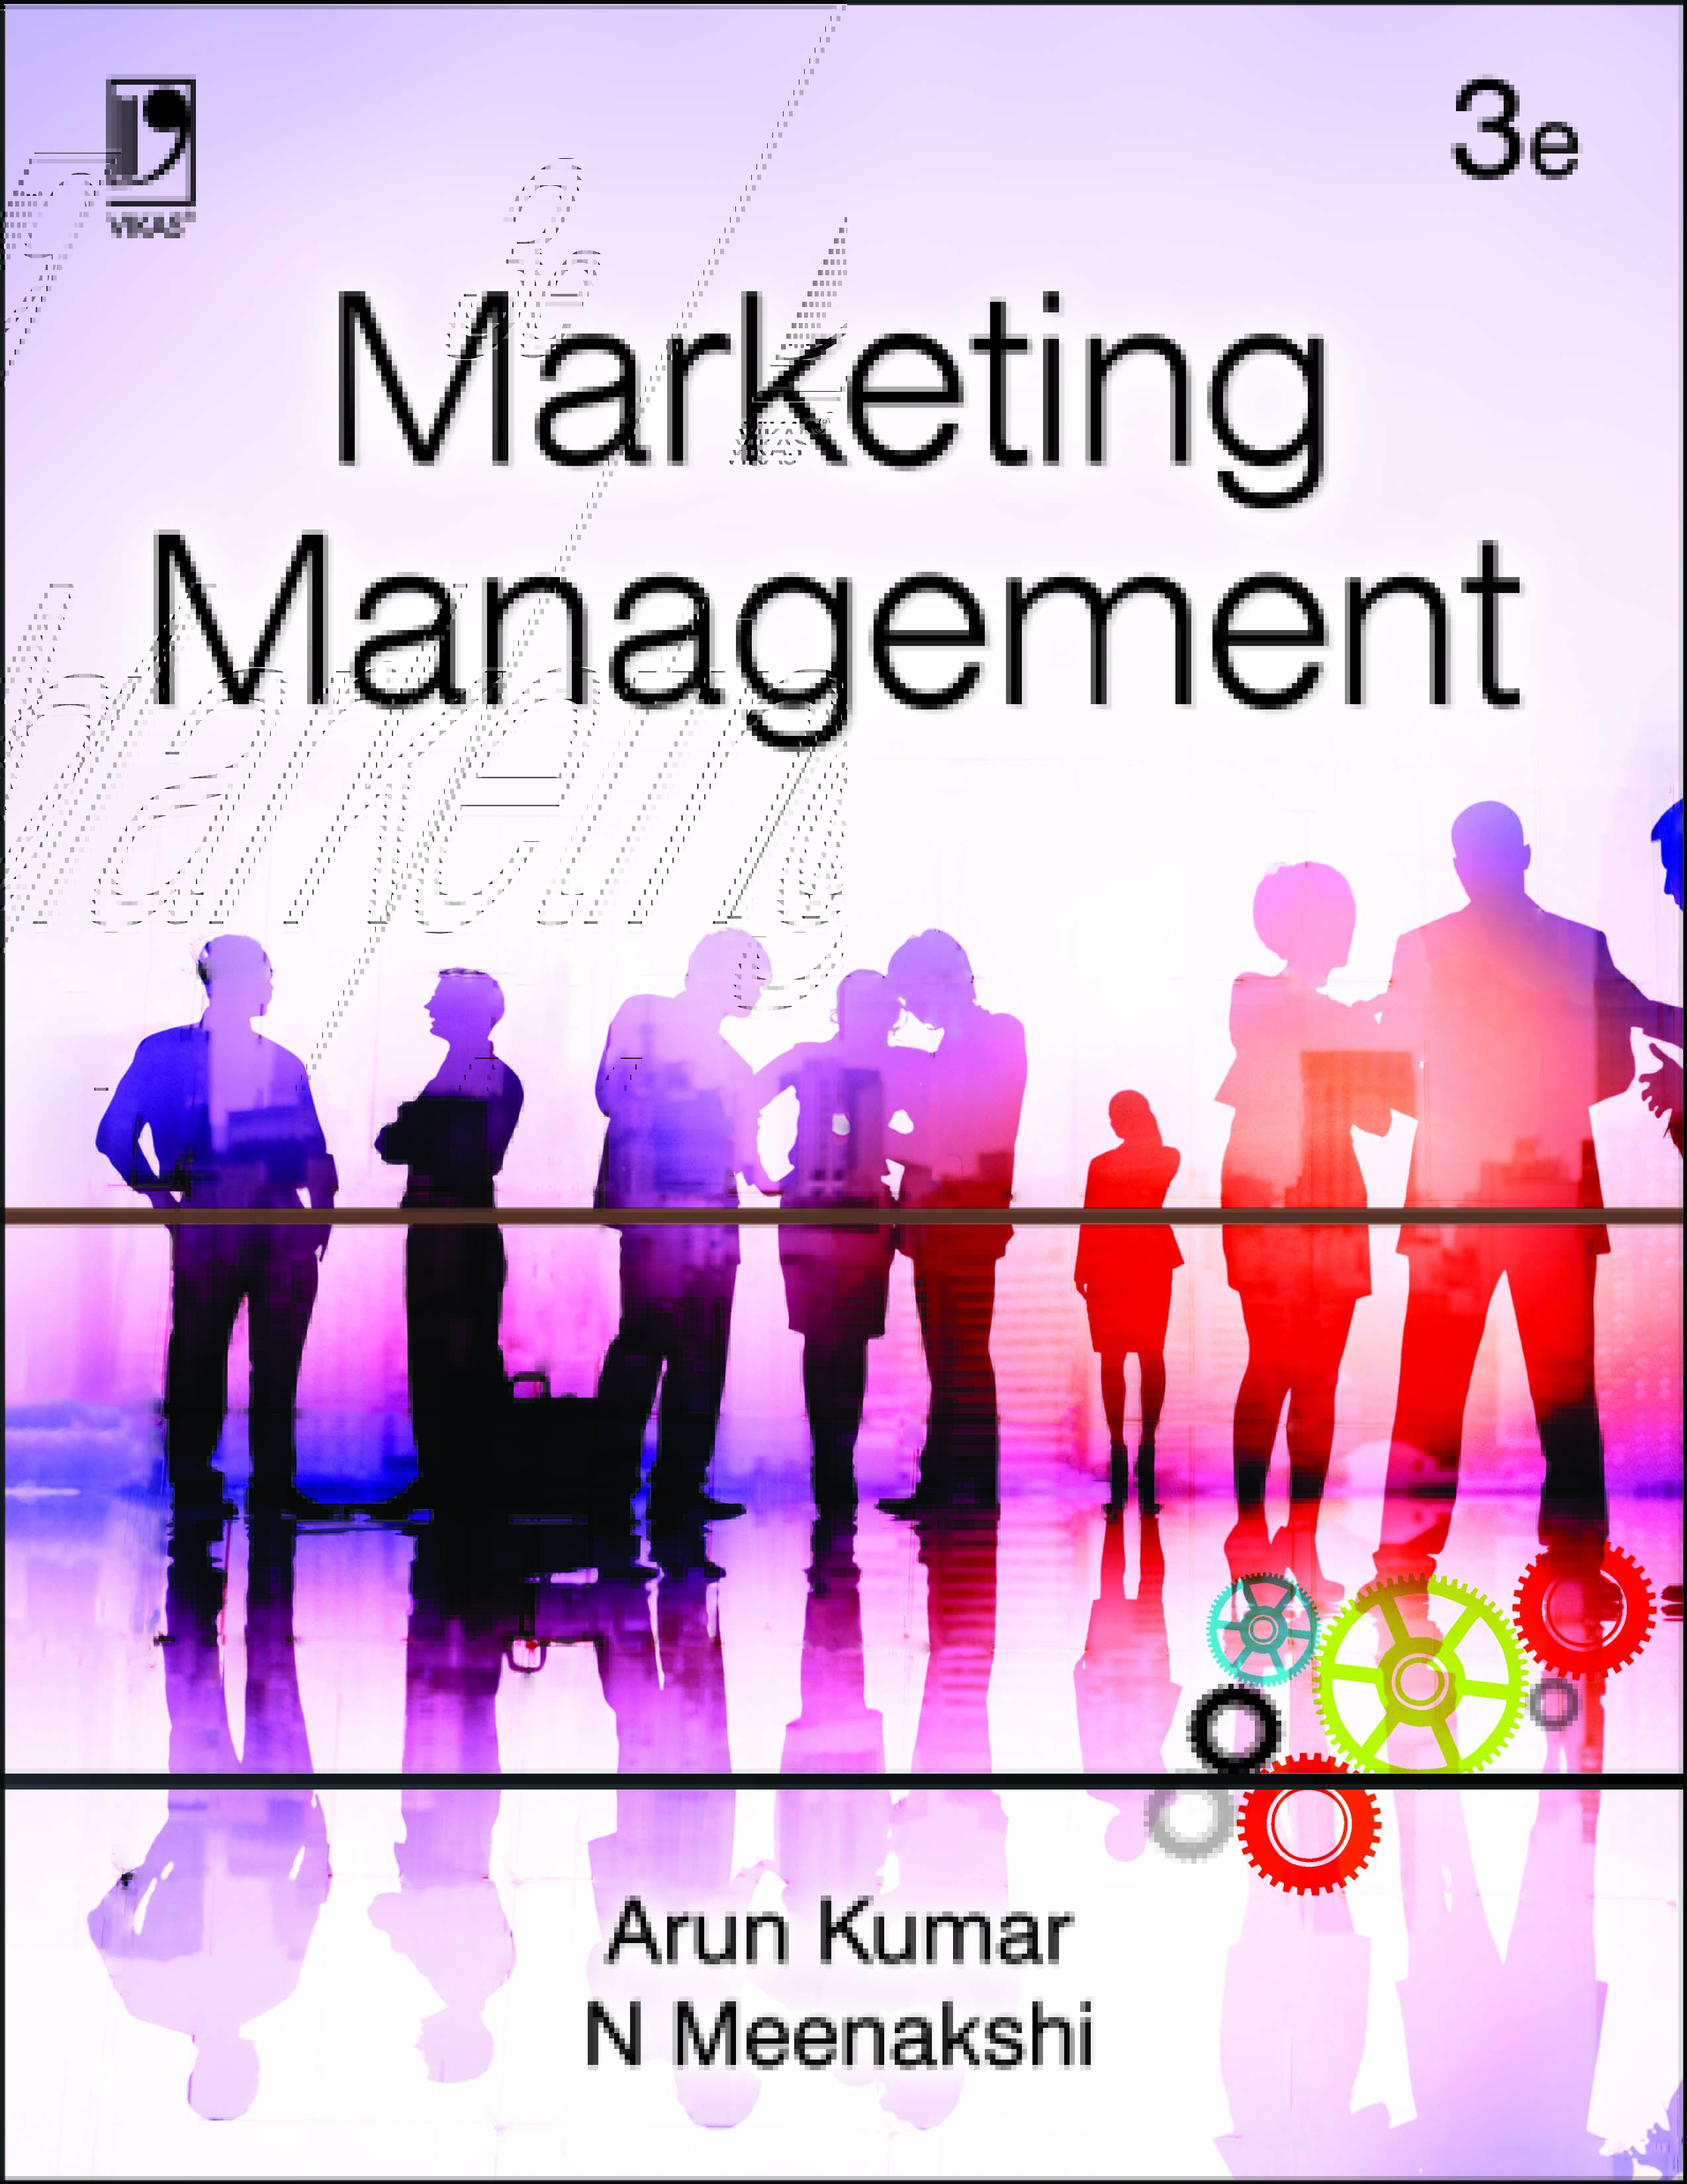 Marketing Management, 3e by Arun Kumar & N. Meenakshi